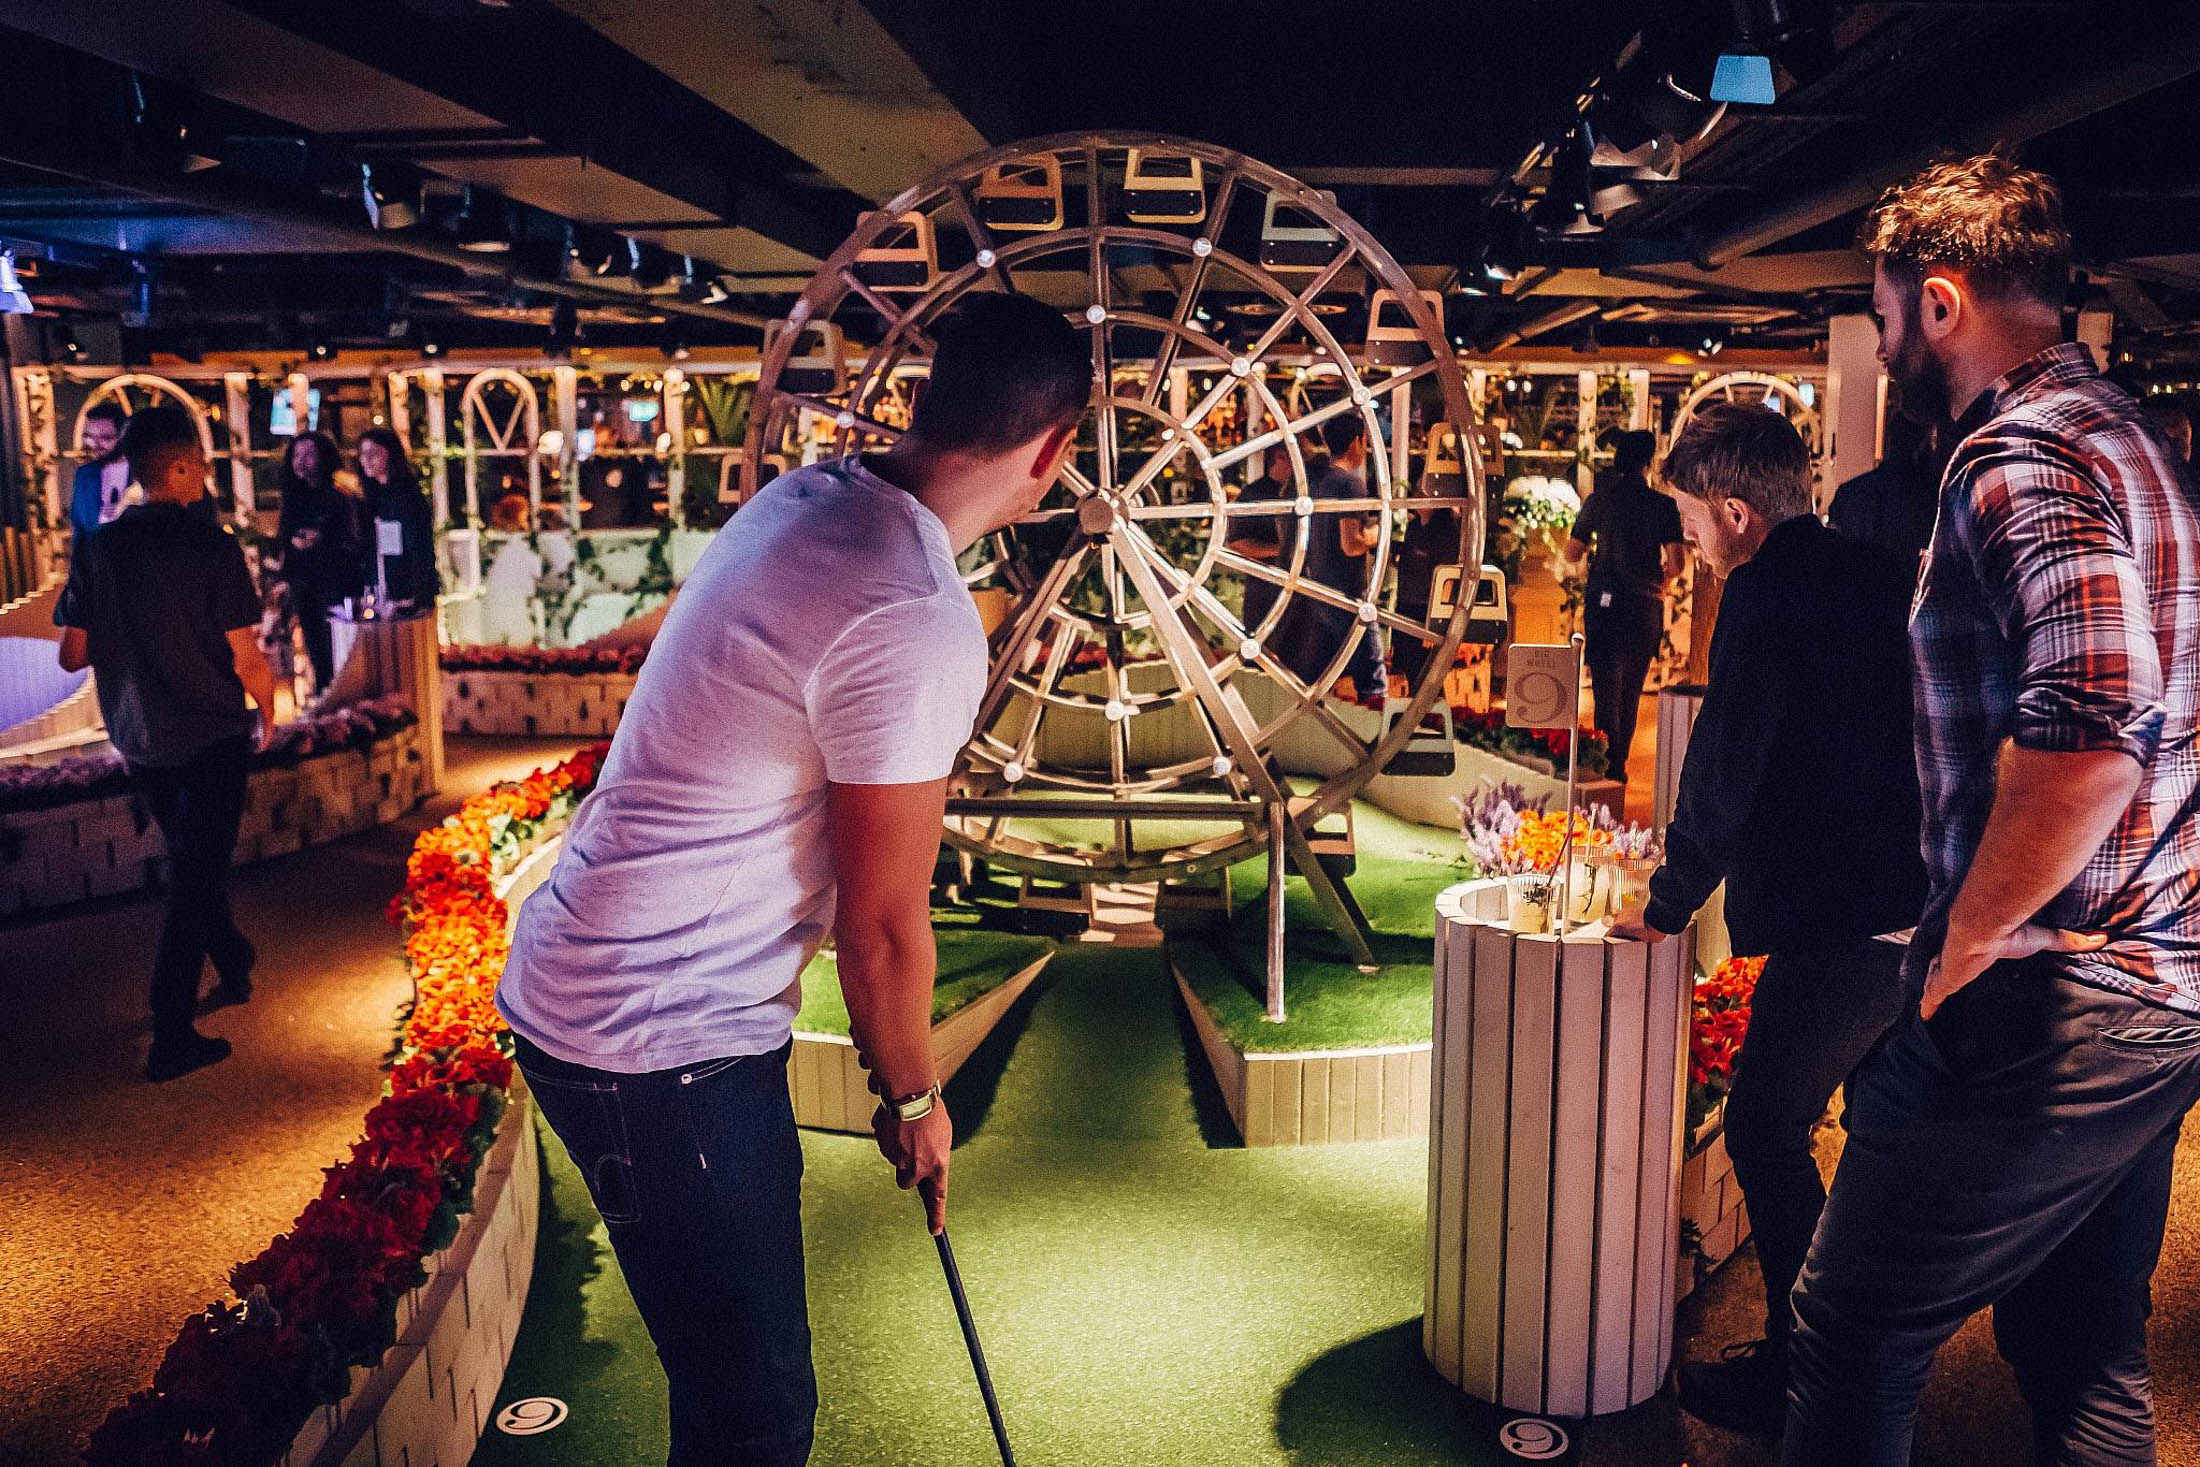 Indoor Crazy Golf Swingers Mini Golf to Open in NYC This Summer